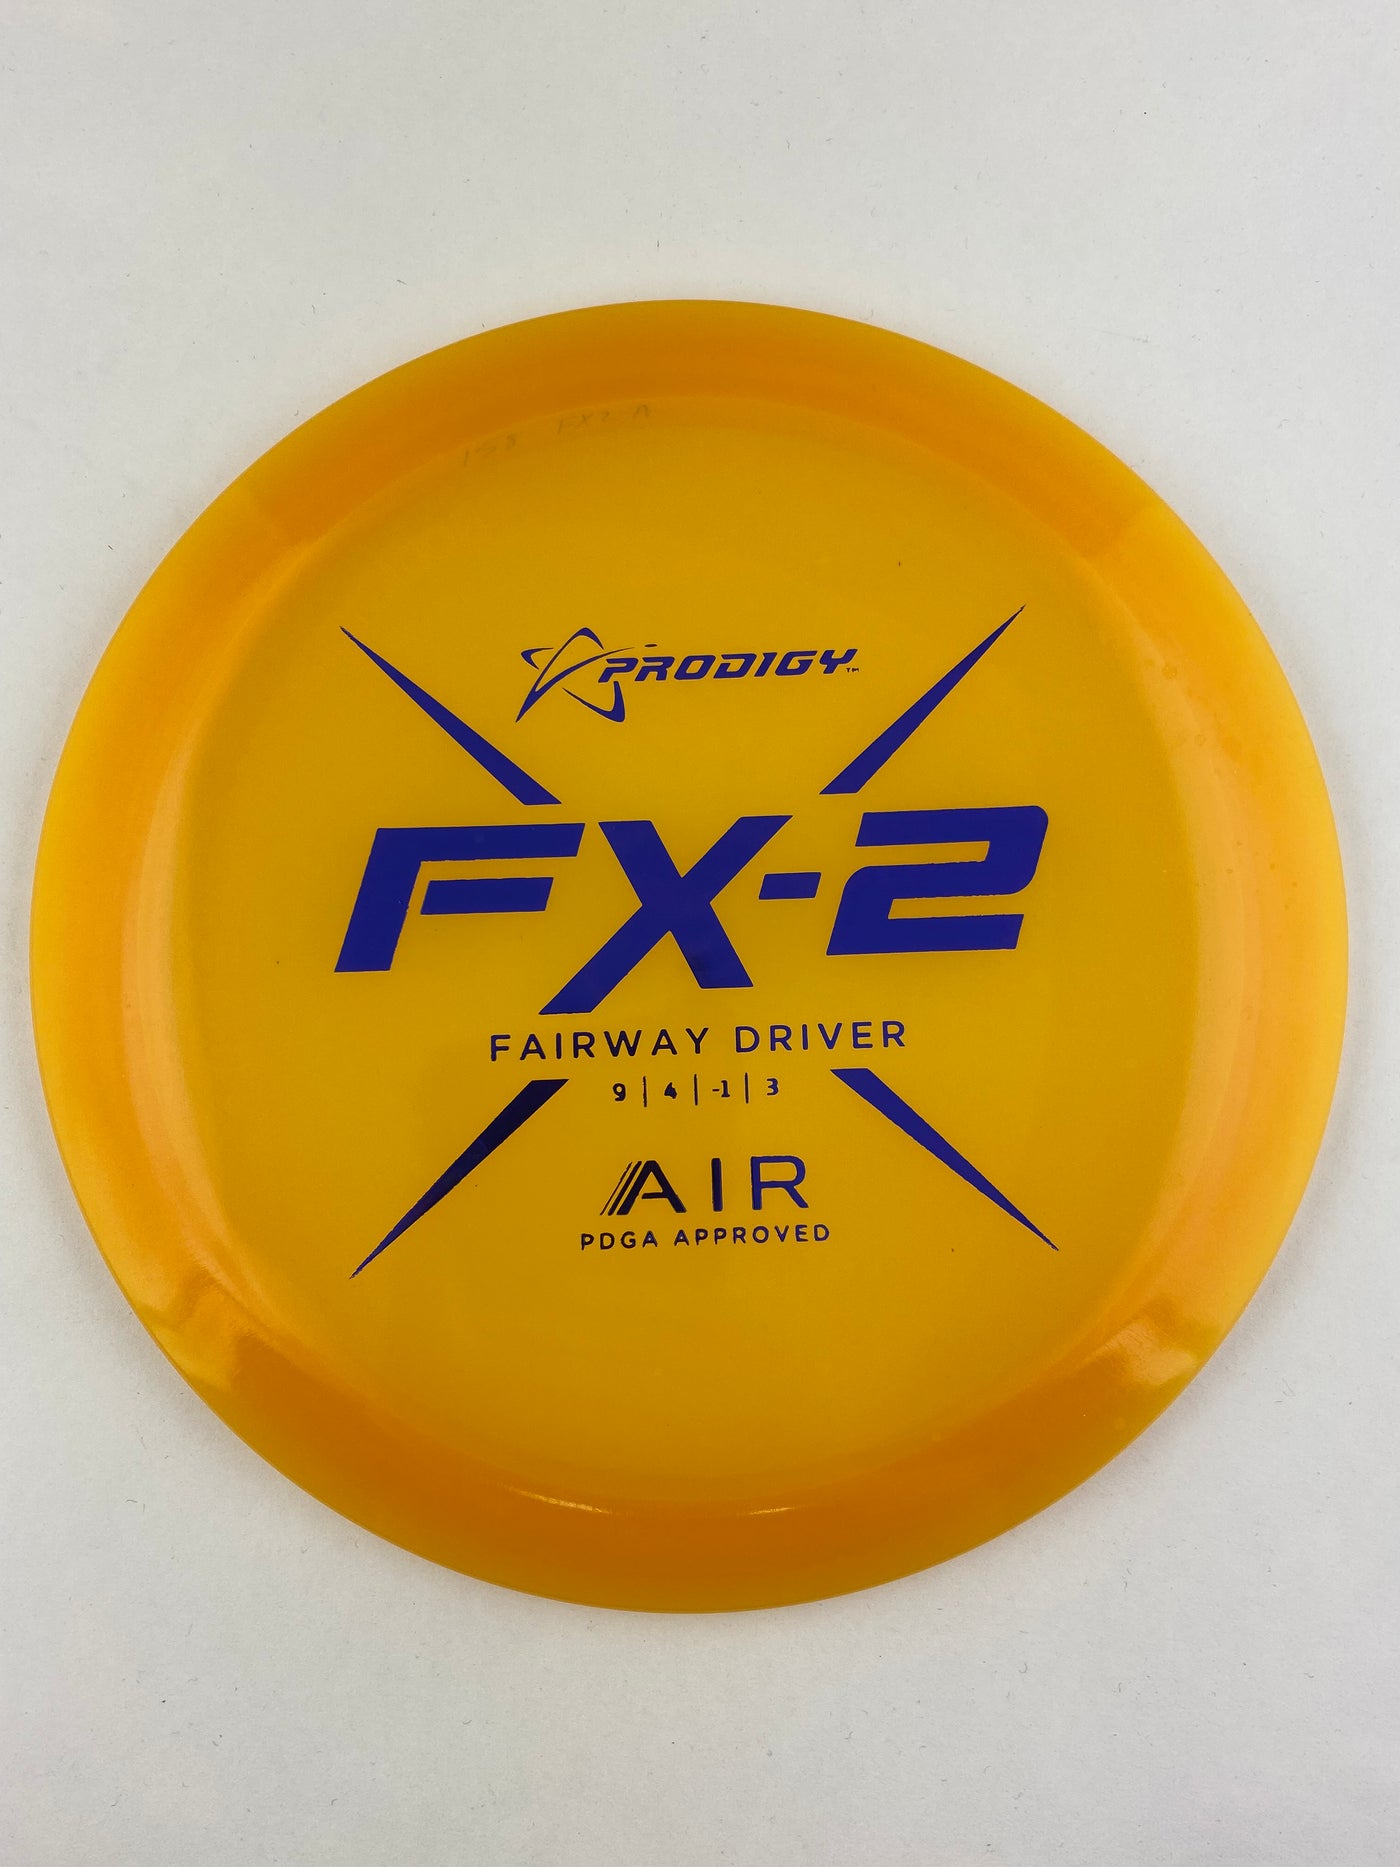 Prodigy 400 Air FX-2 Fairway Driver - Speed 9